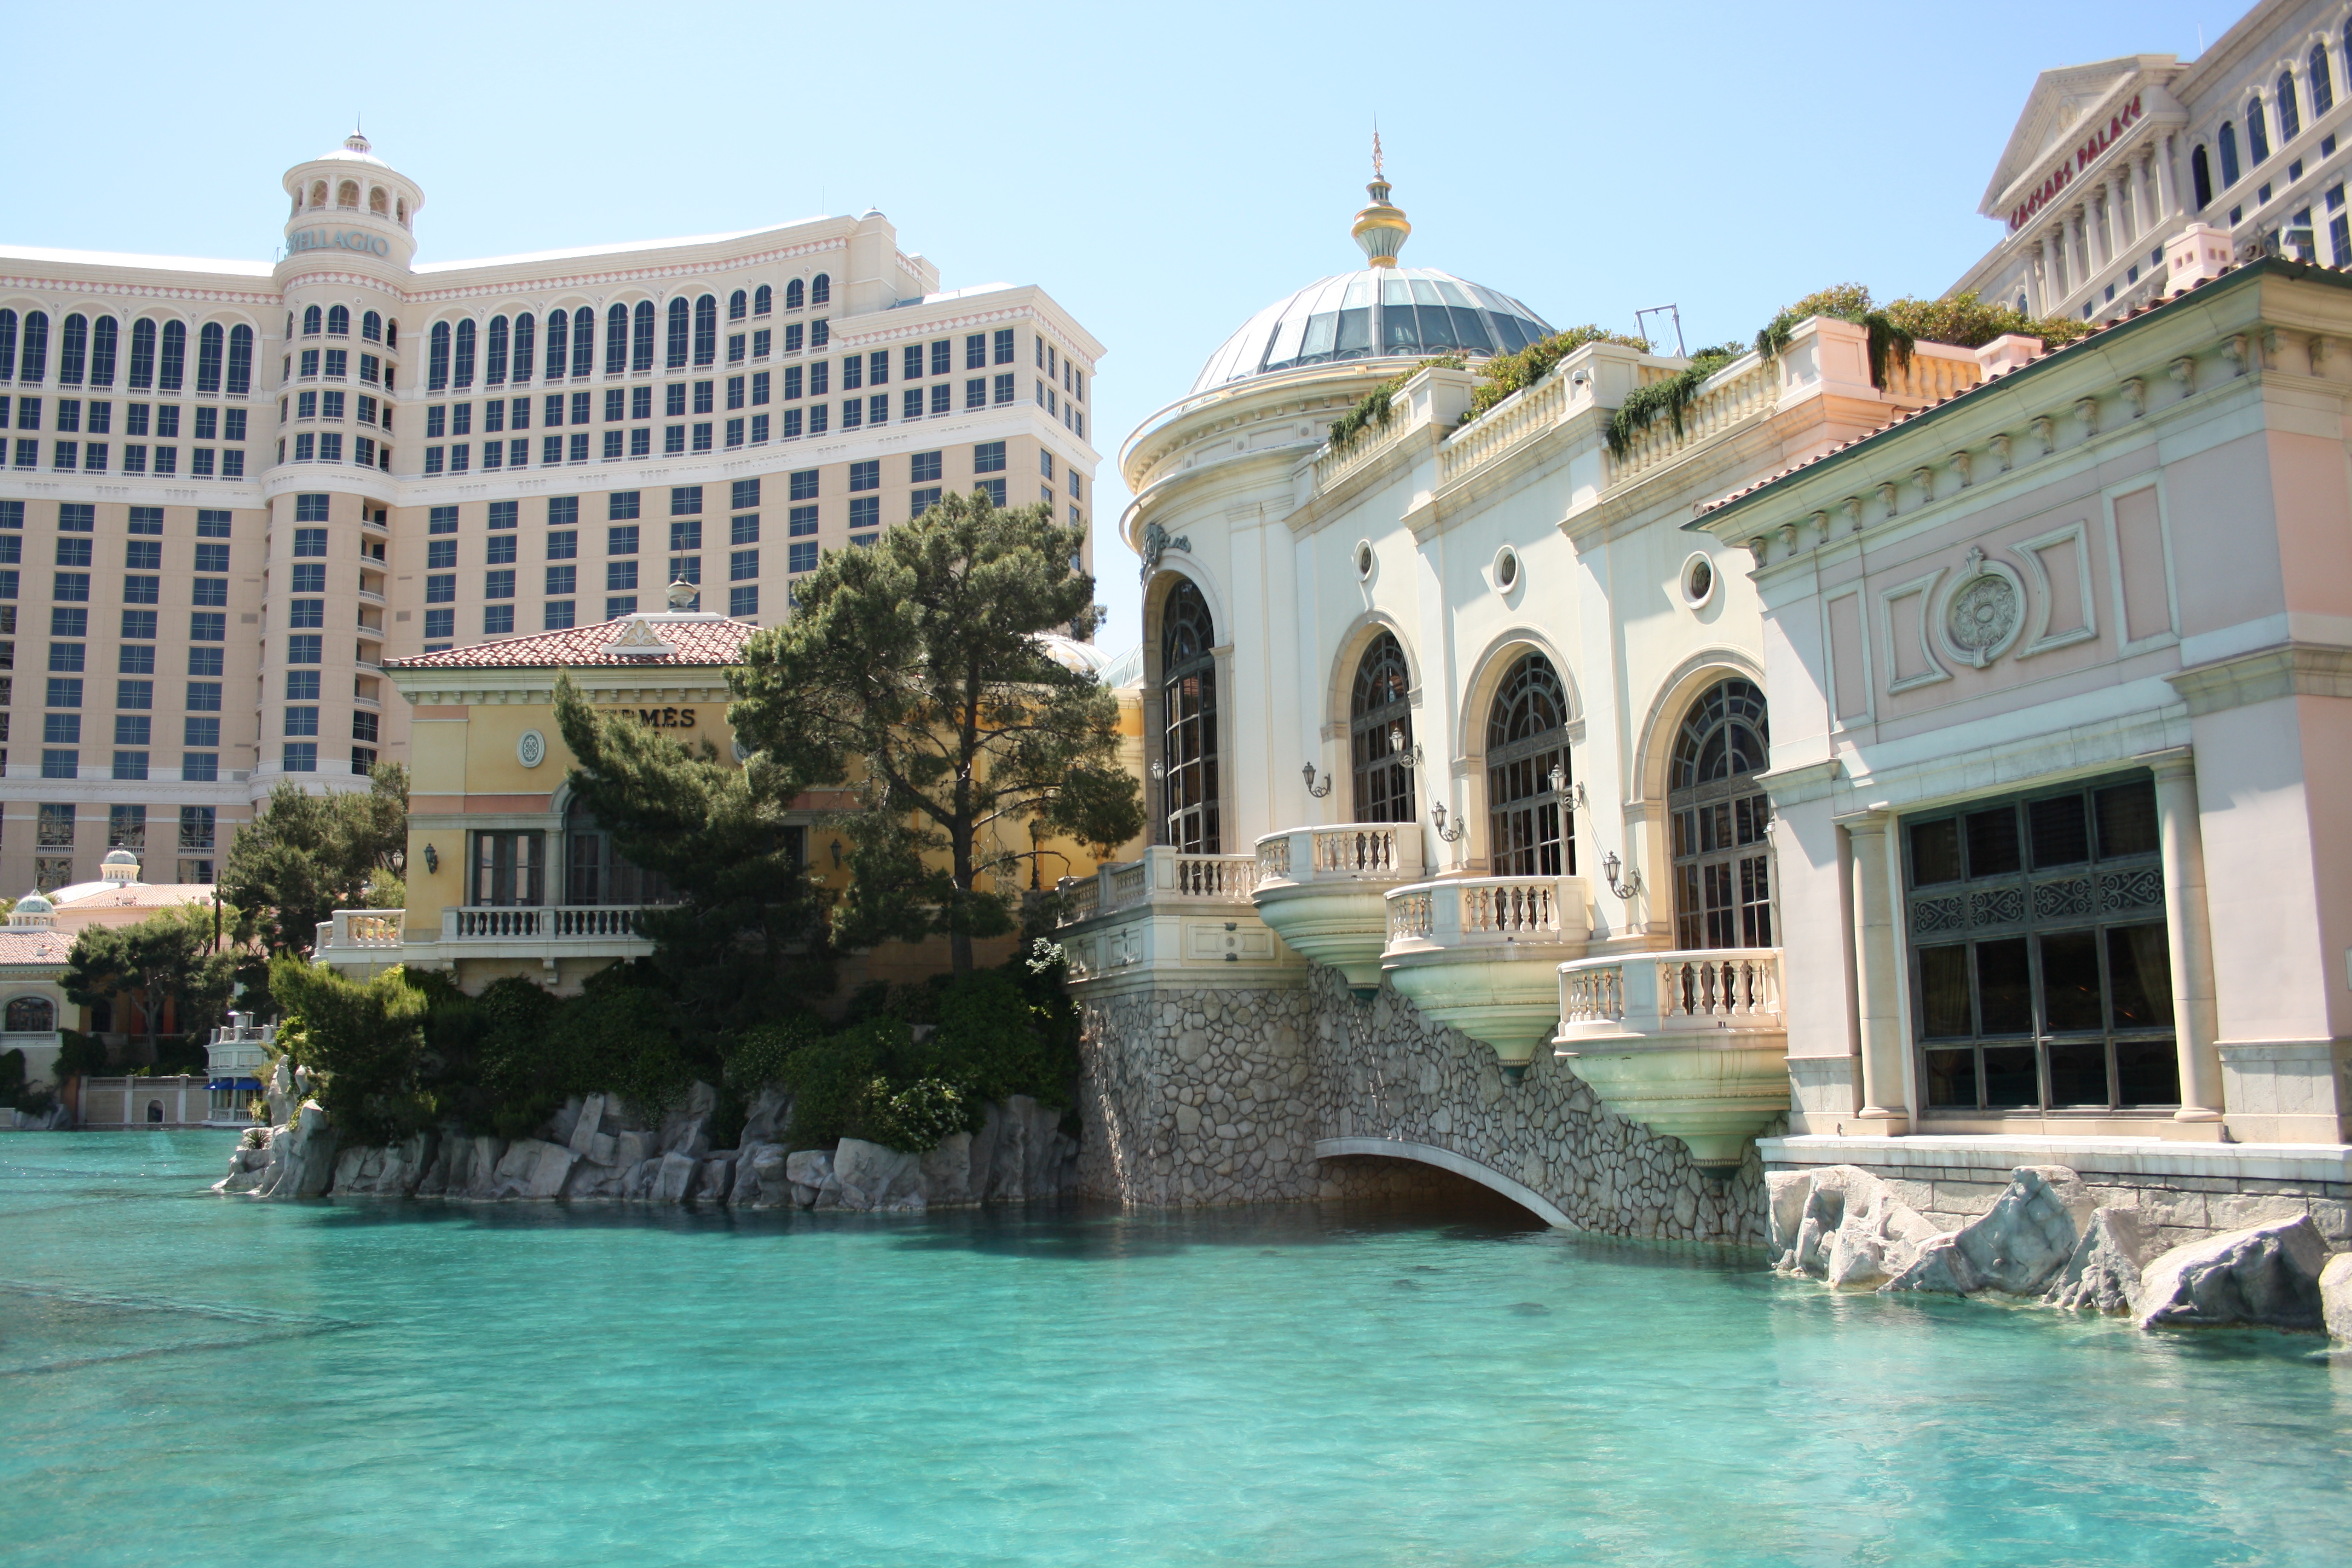 Hotel Bellagio with artificial lake, casino, luxury hotel, Las